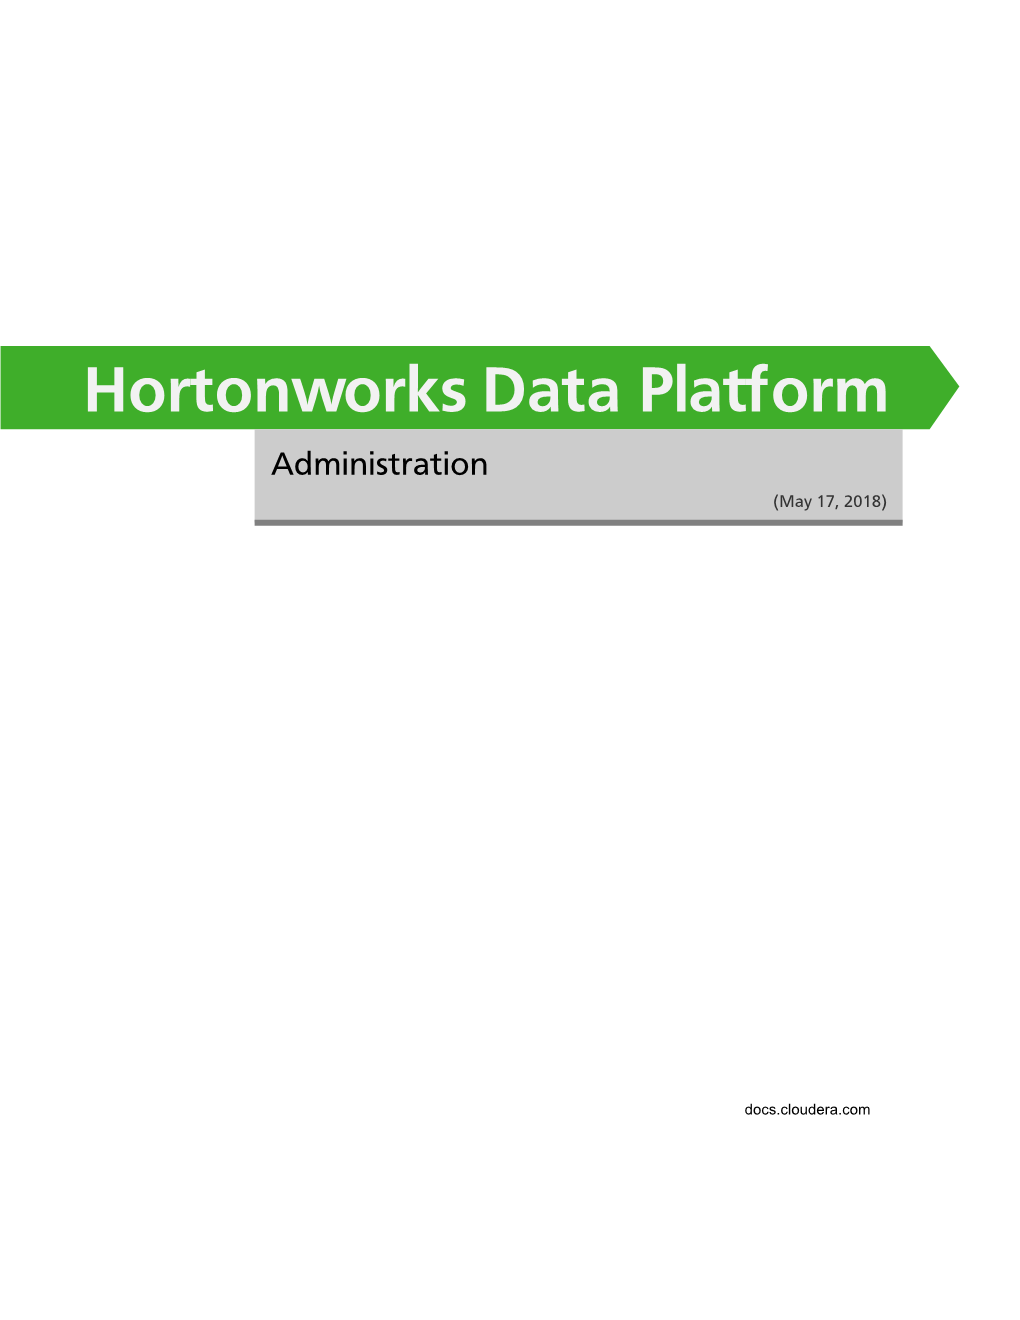 Hortonworks Data Platform Administration (May 17, 2018)